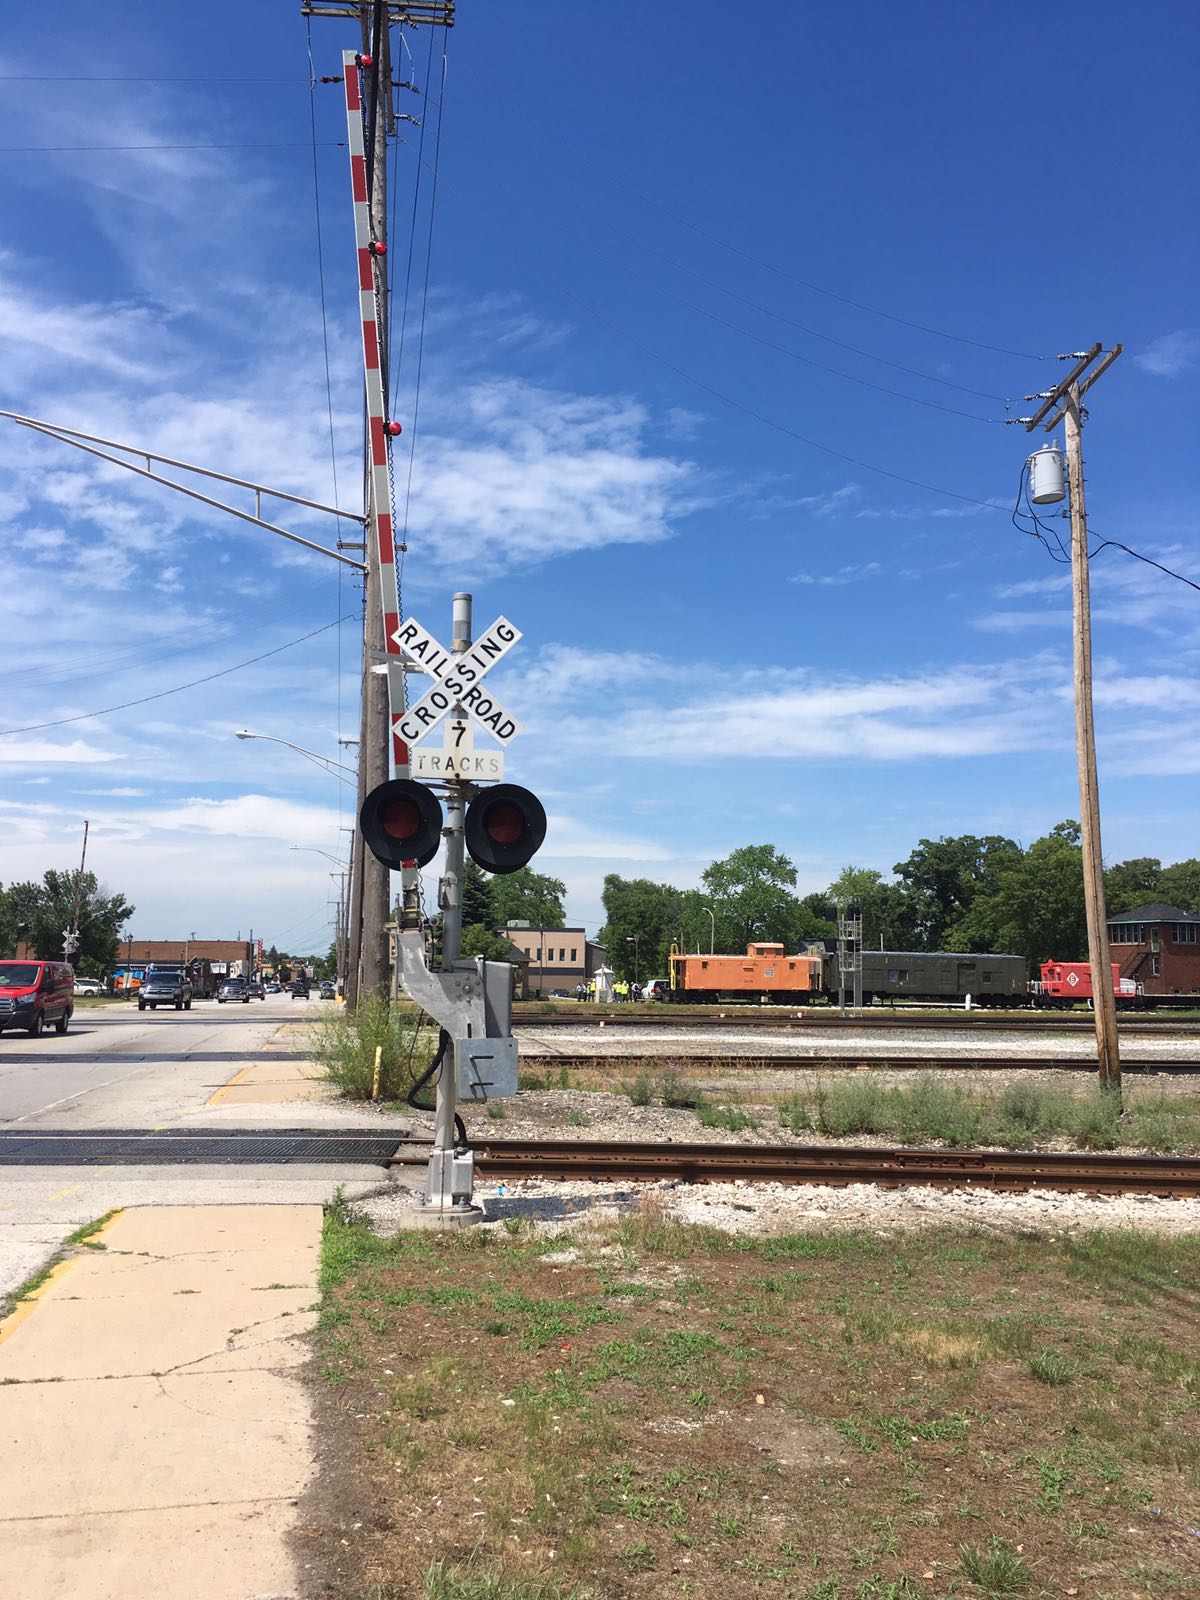 Recorrido a vías férreas y cruces a nivel en Chicago, organizado por Safetran Systems Corporation

